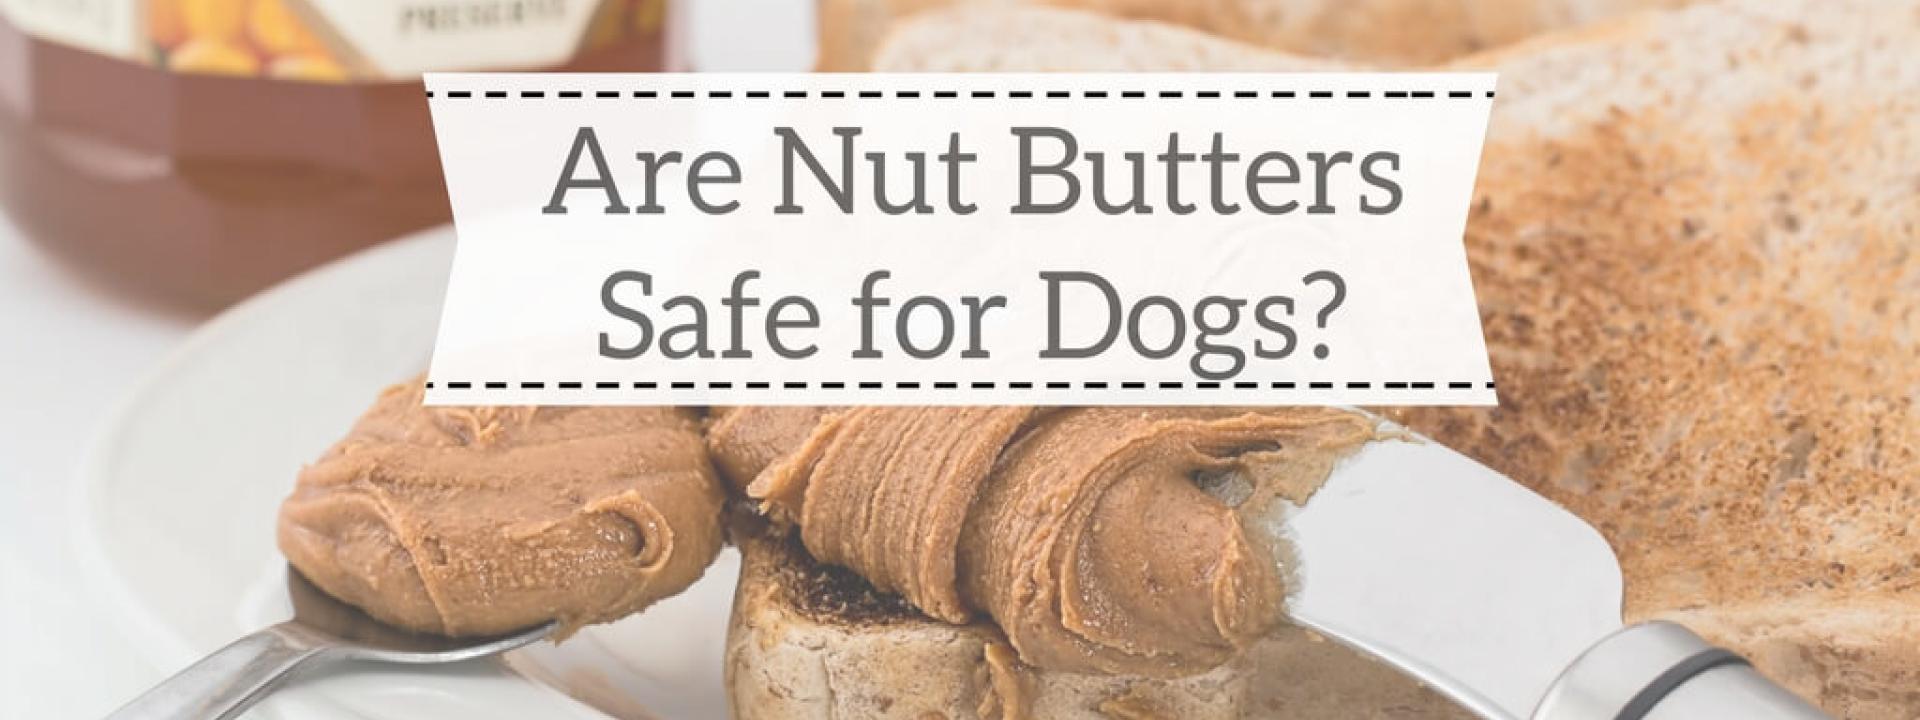 Nut-Butters-Dogs-Blog-Header.jpg